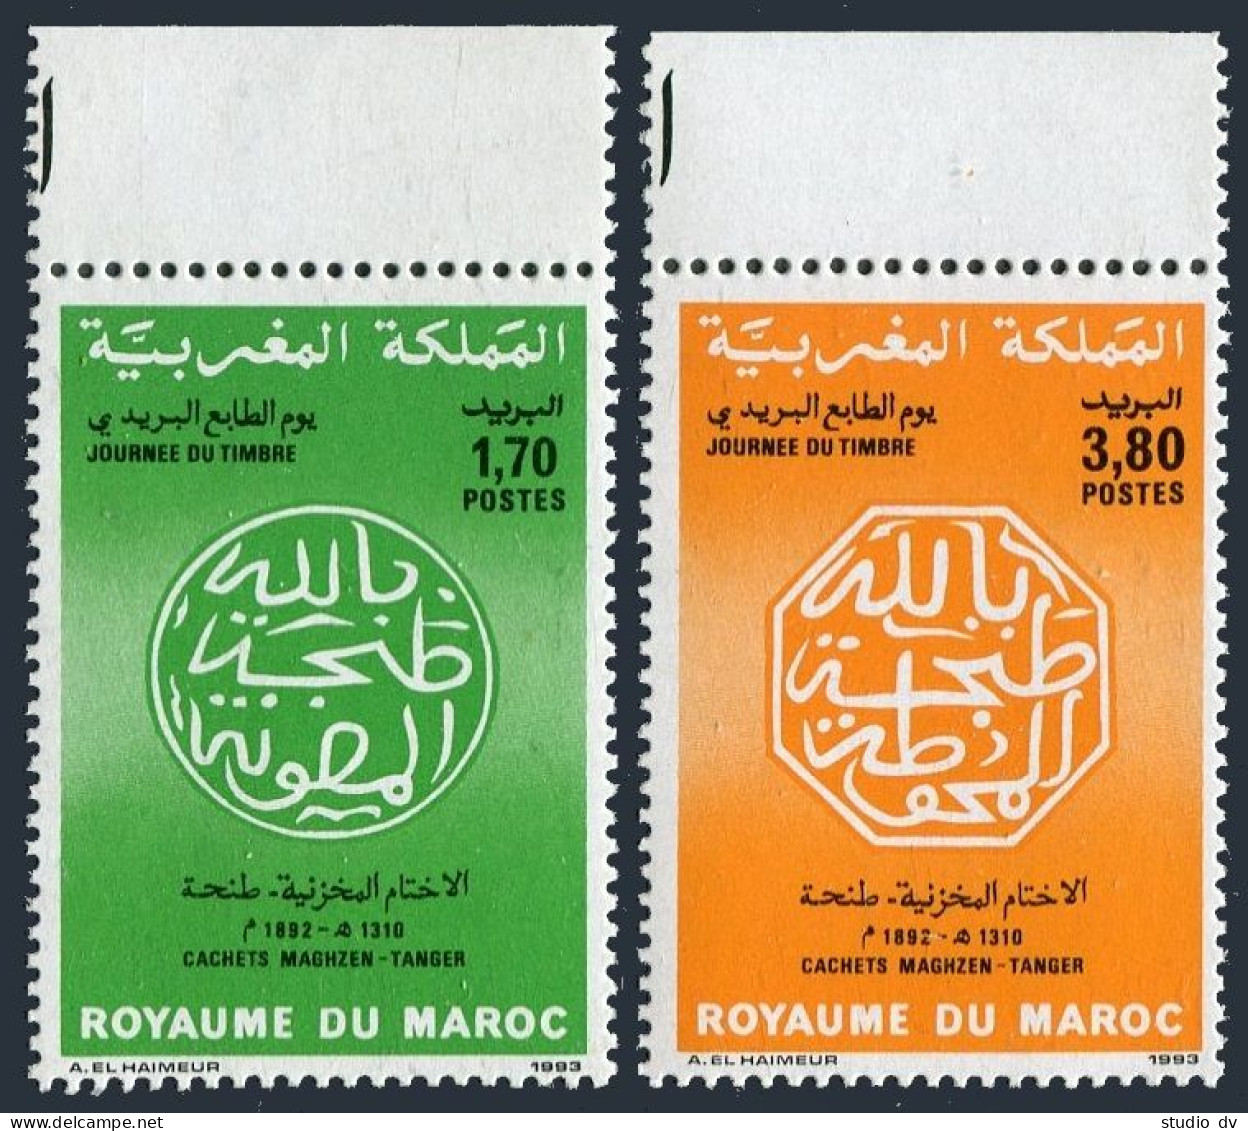 Morocco 756-757,MNH.Mi 1276-1277. Stamp Day 1993.Sherifian Postal Seal. - Maroc (1956-...)